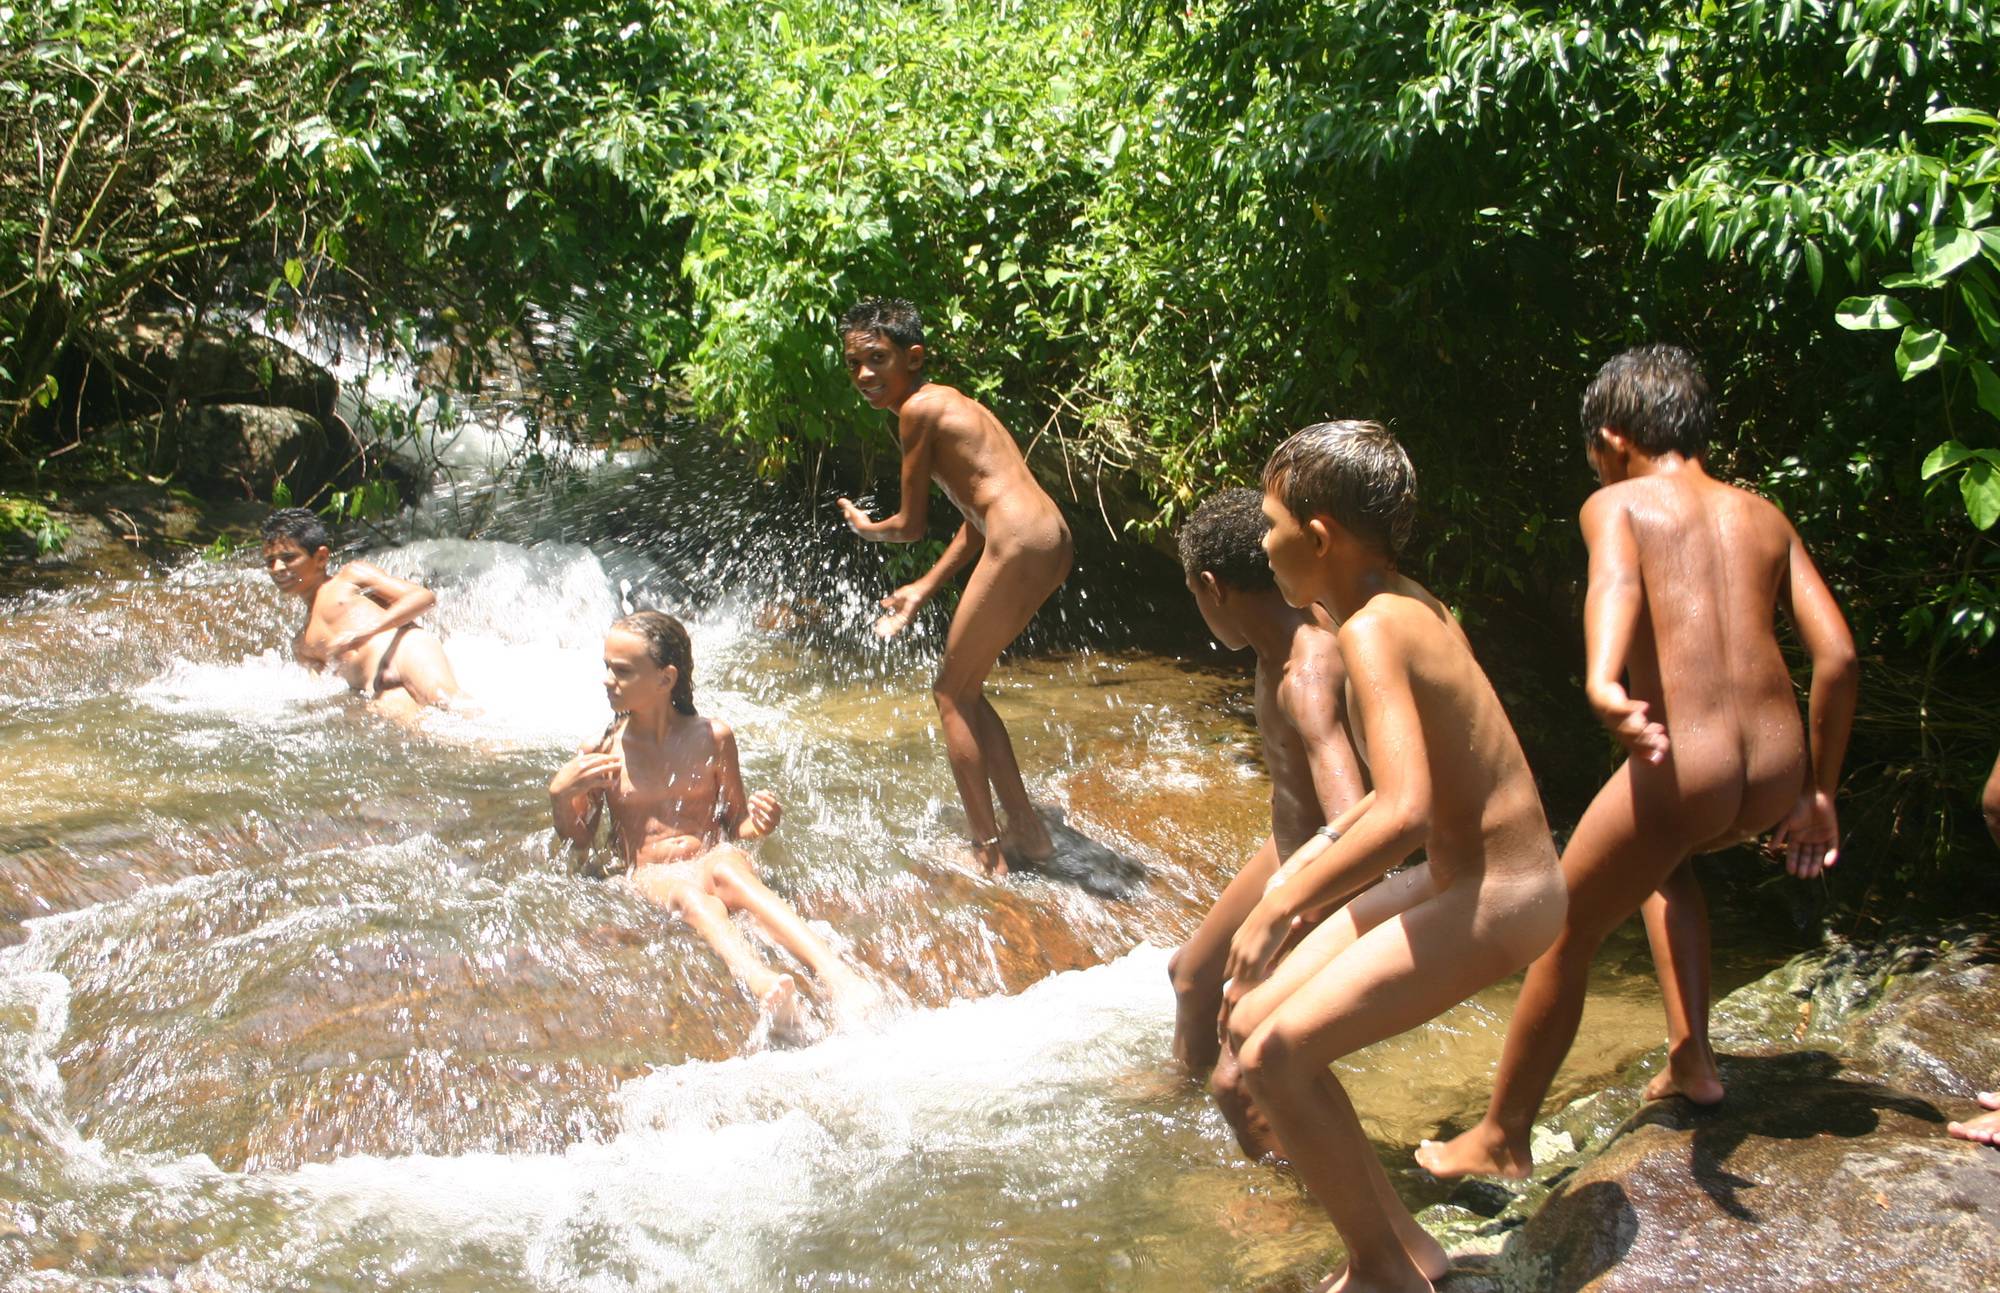 Purenudism Pics-Brazilian River Water Fight - 3